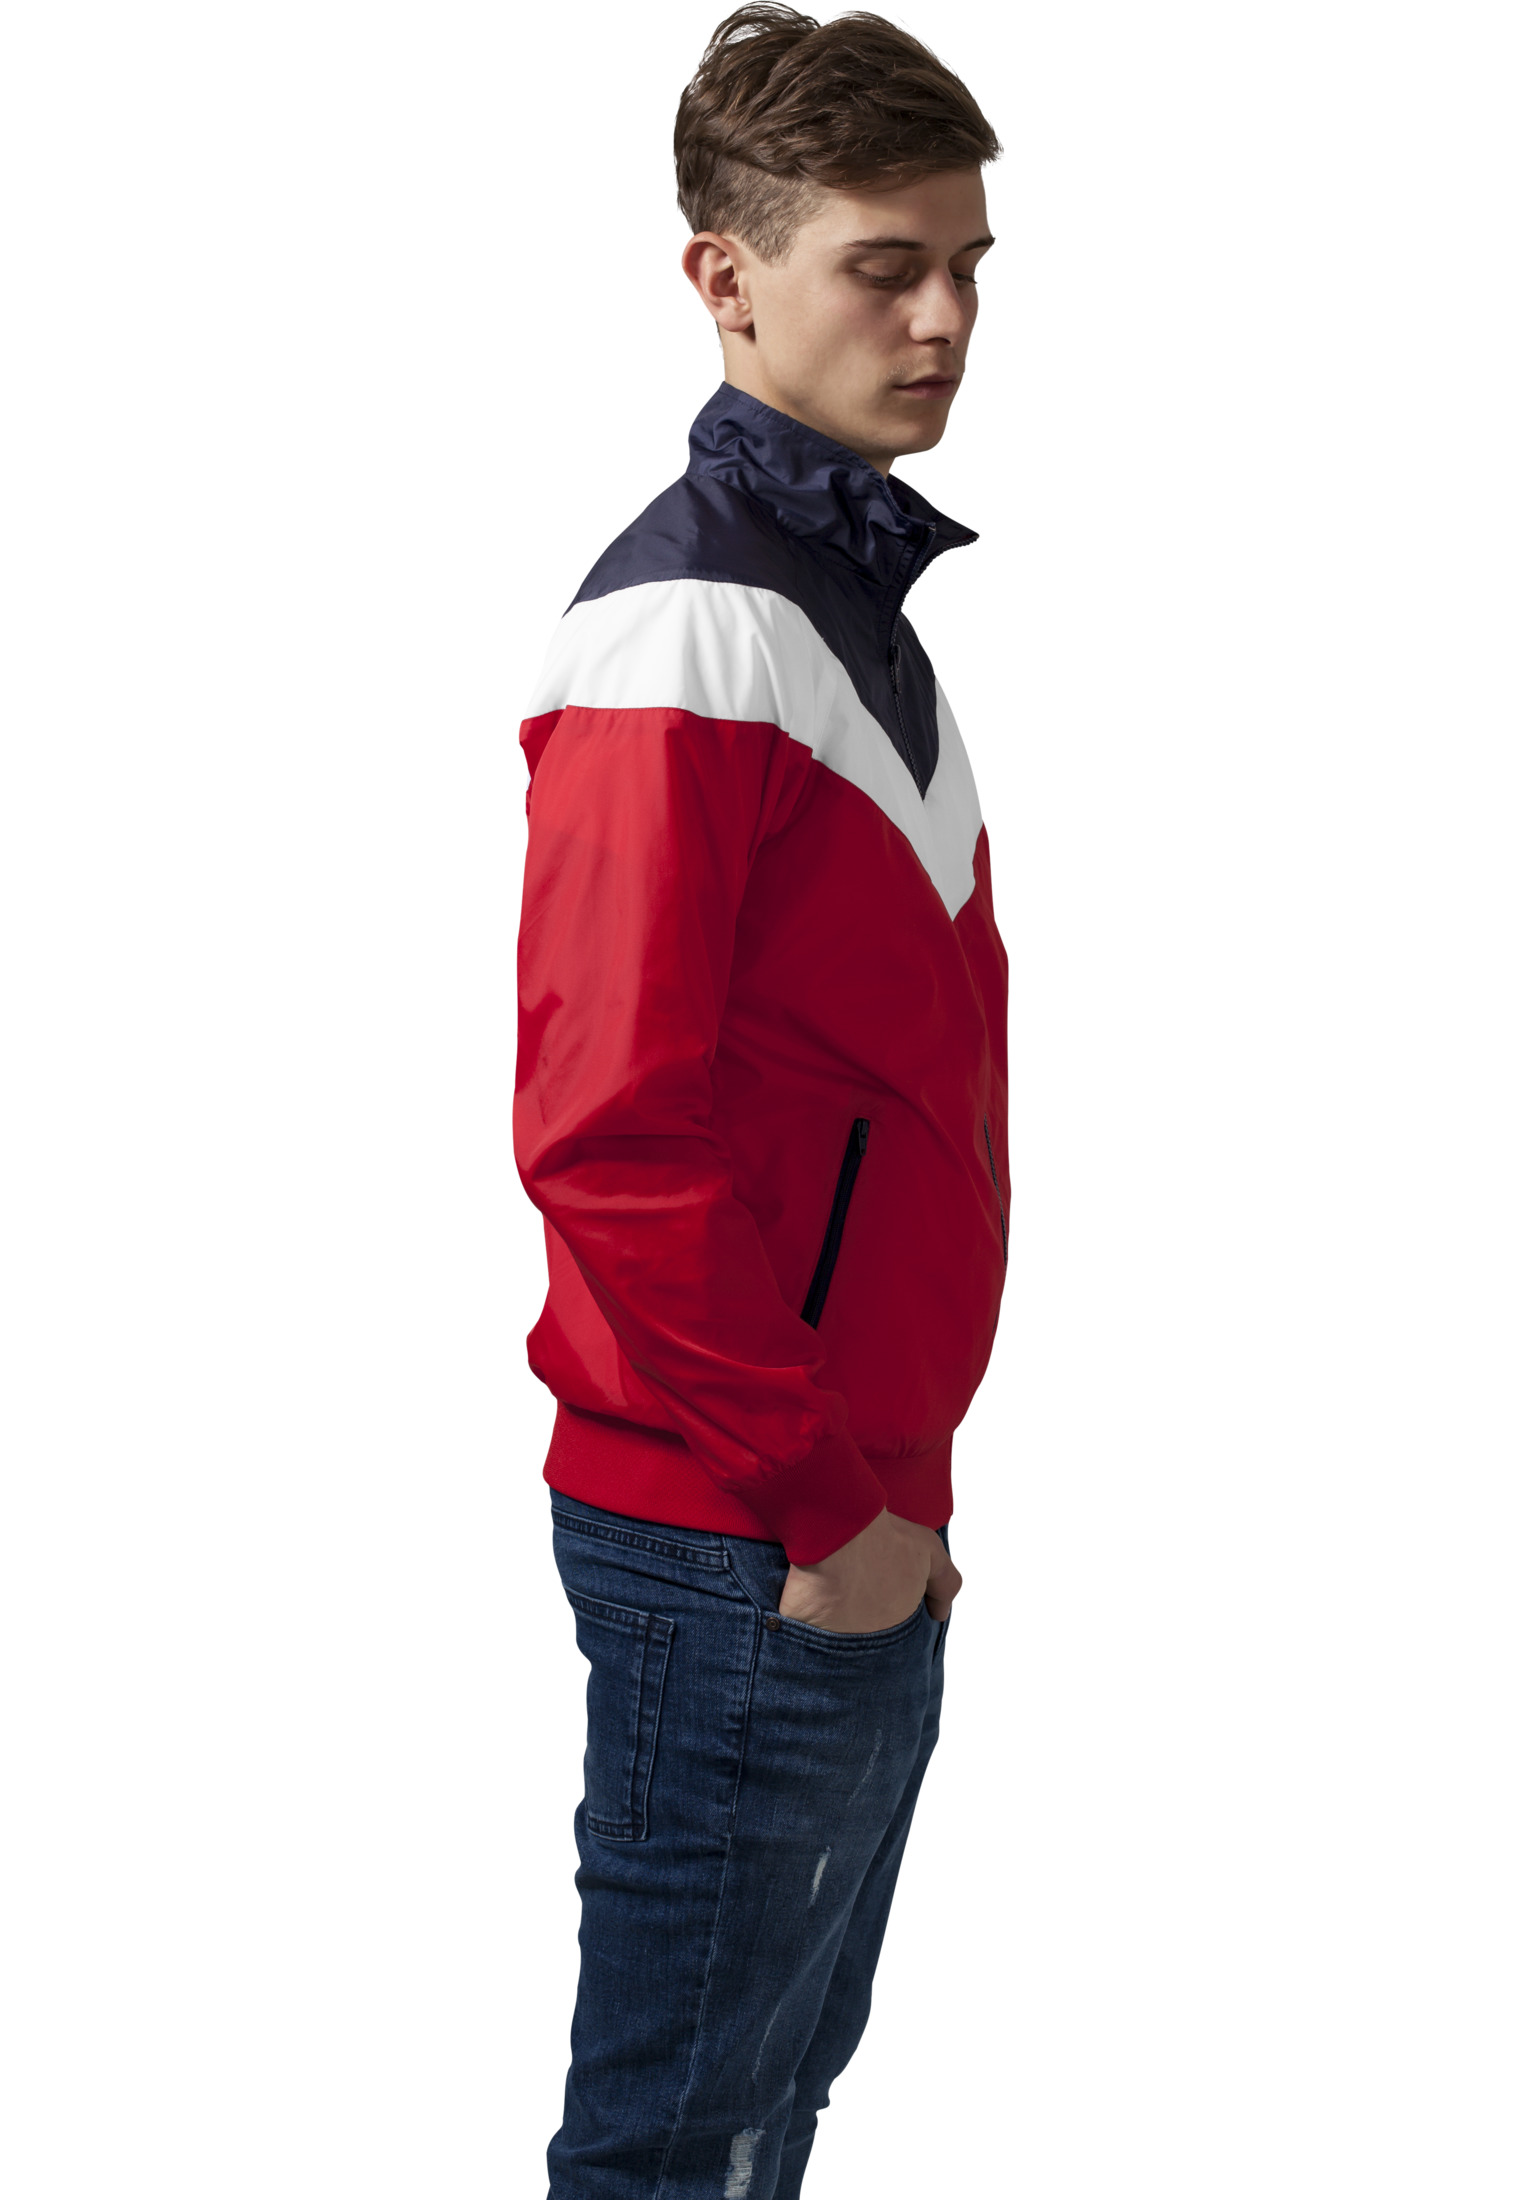 Leichte Jacken Arrow Zip Jacket in Farbe red/nvy/wht